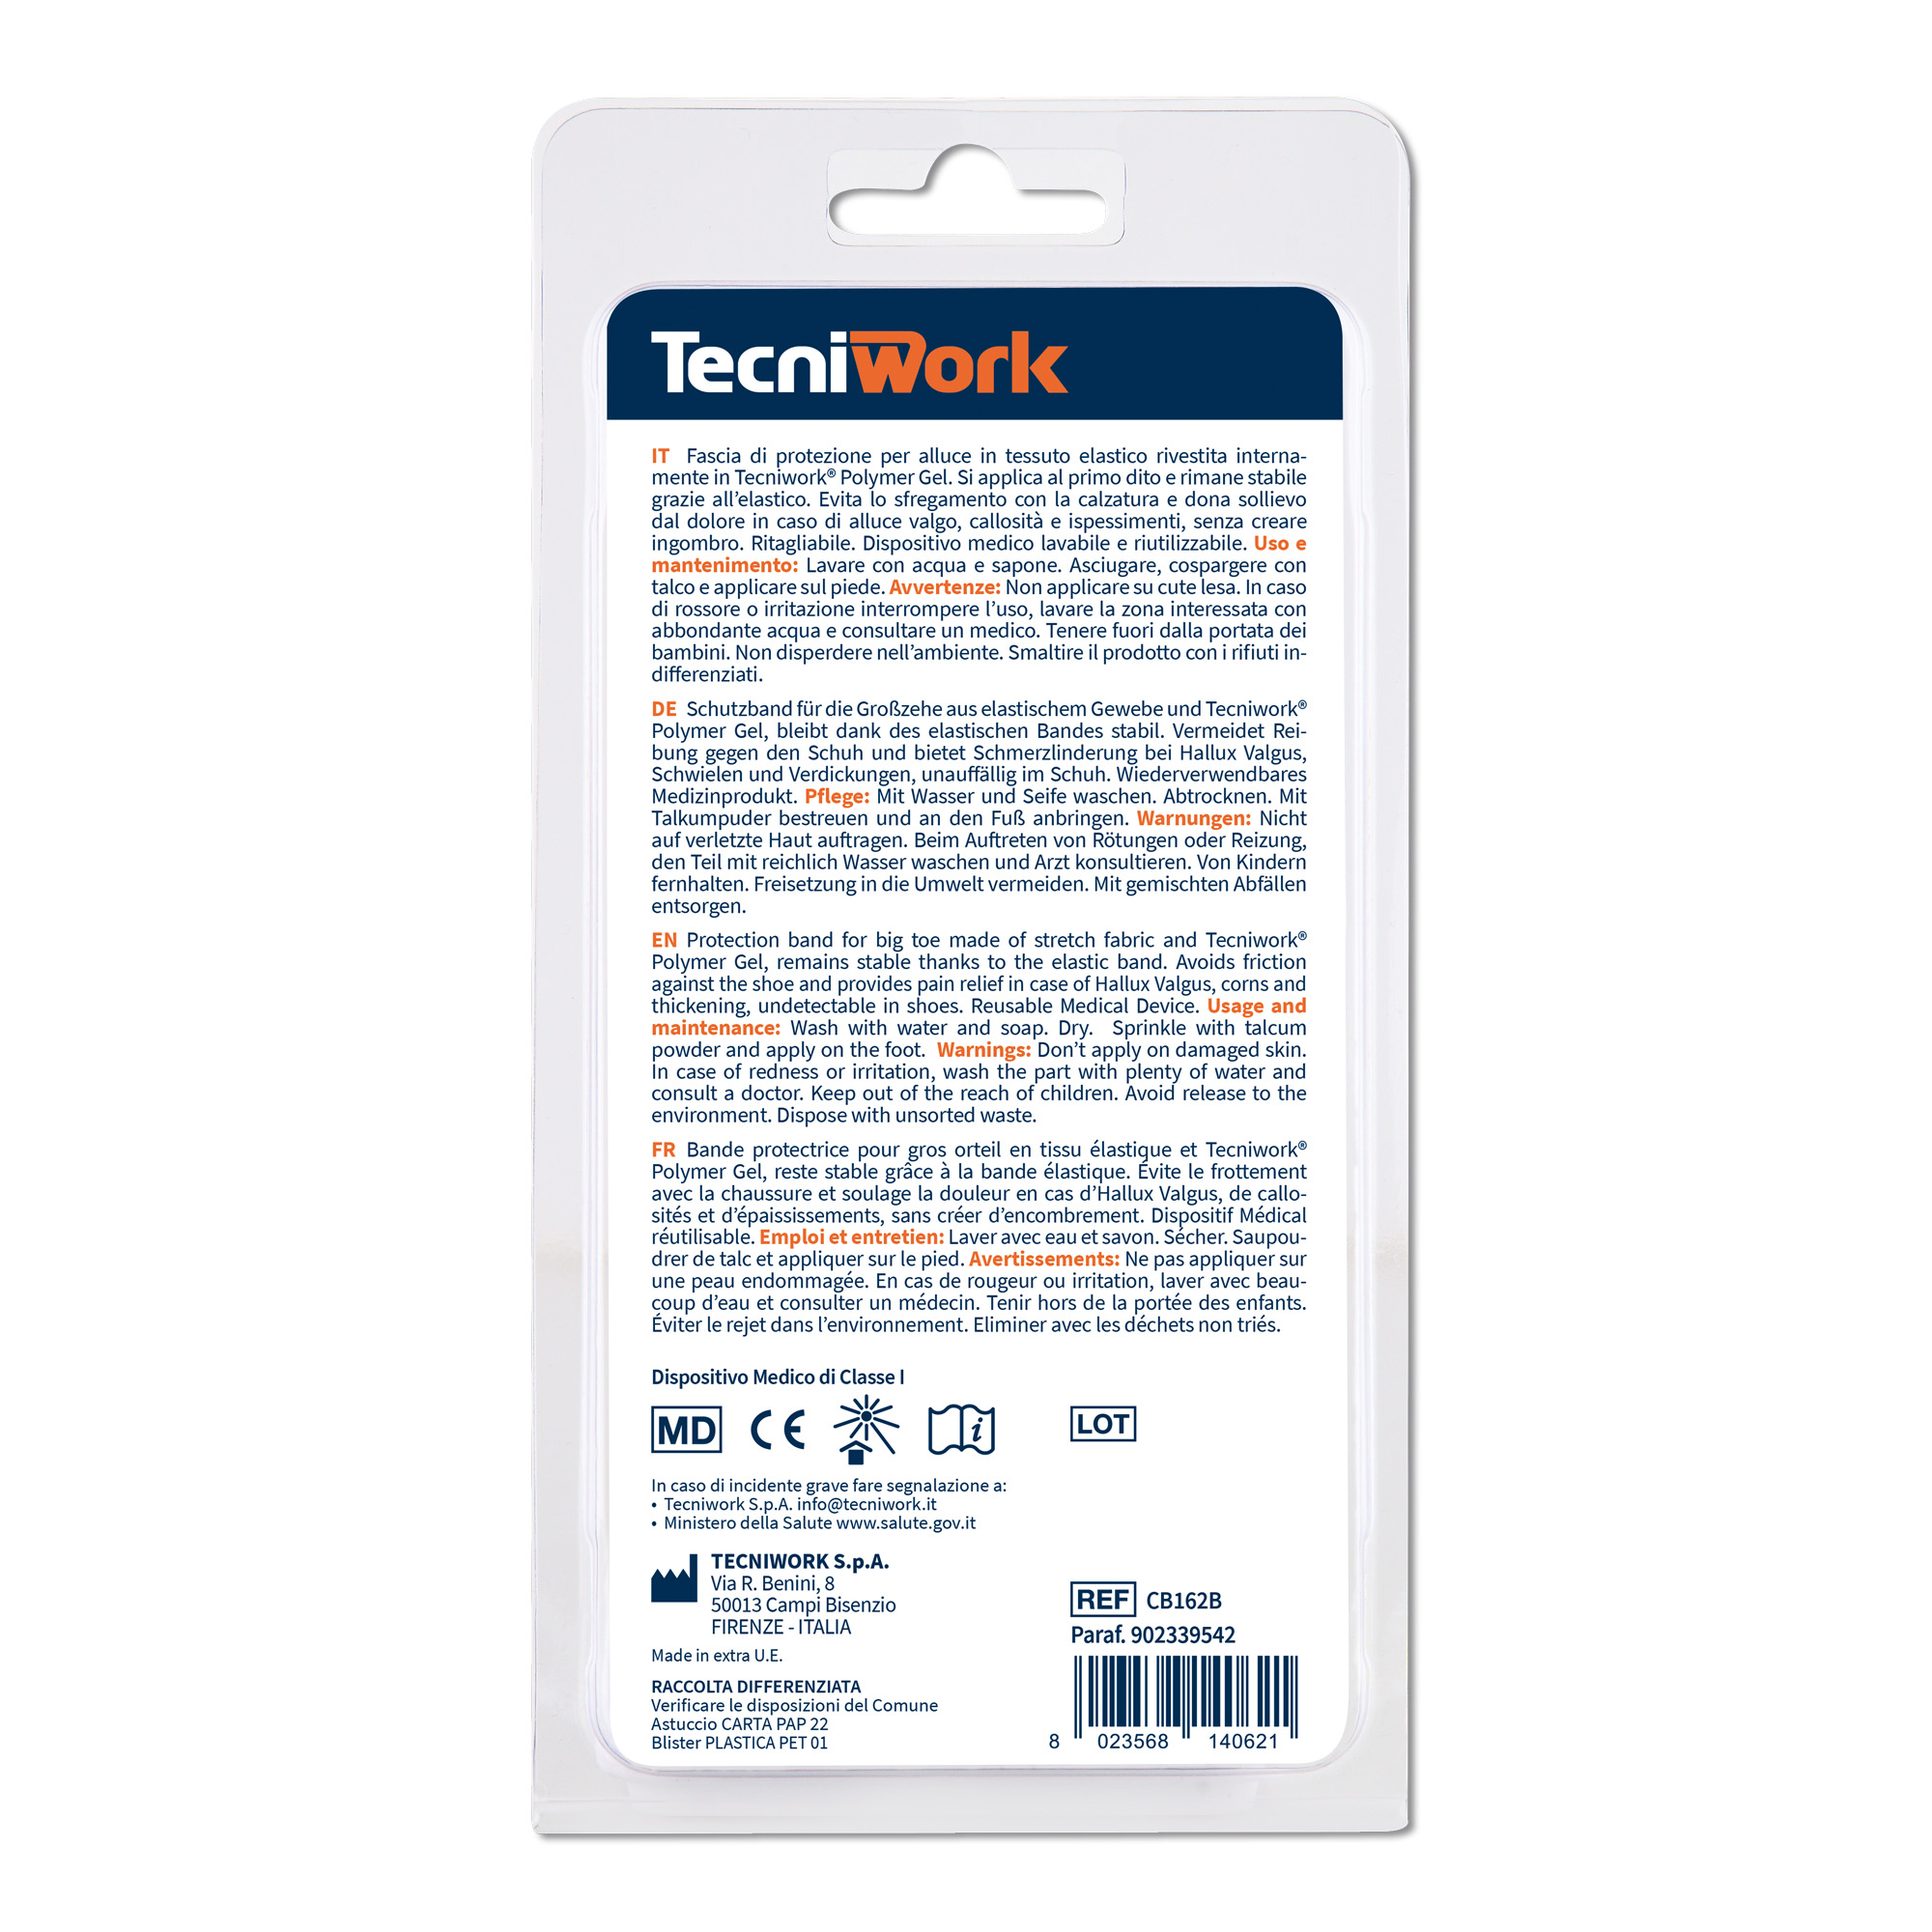 Tecniwork® Polymer Gel fabric toe protection bandage Bio-Gel